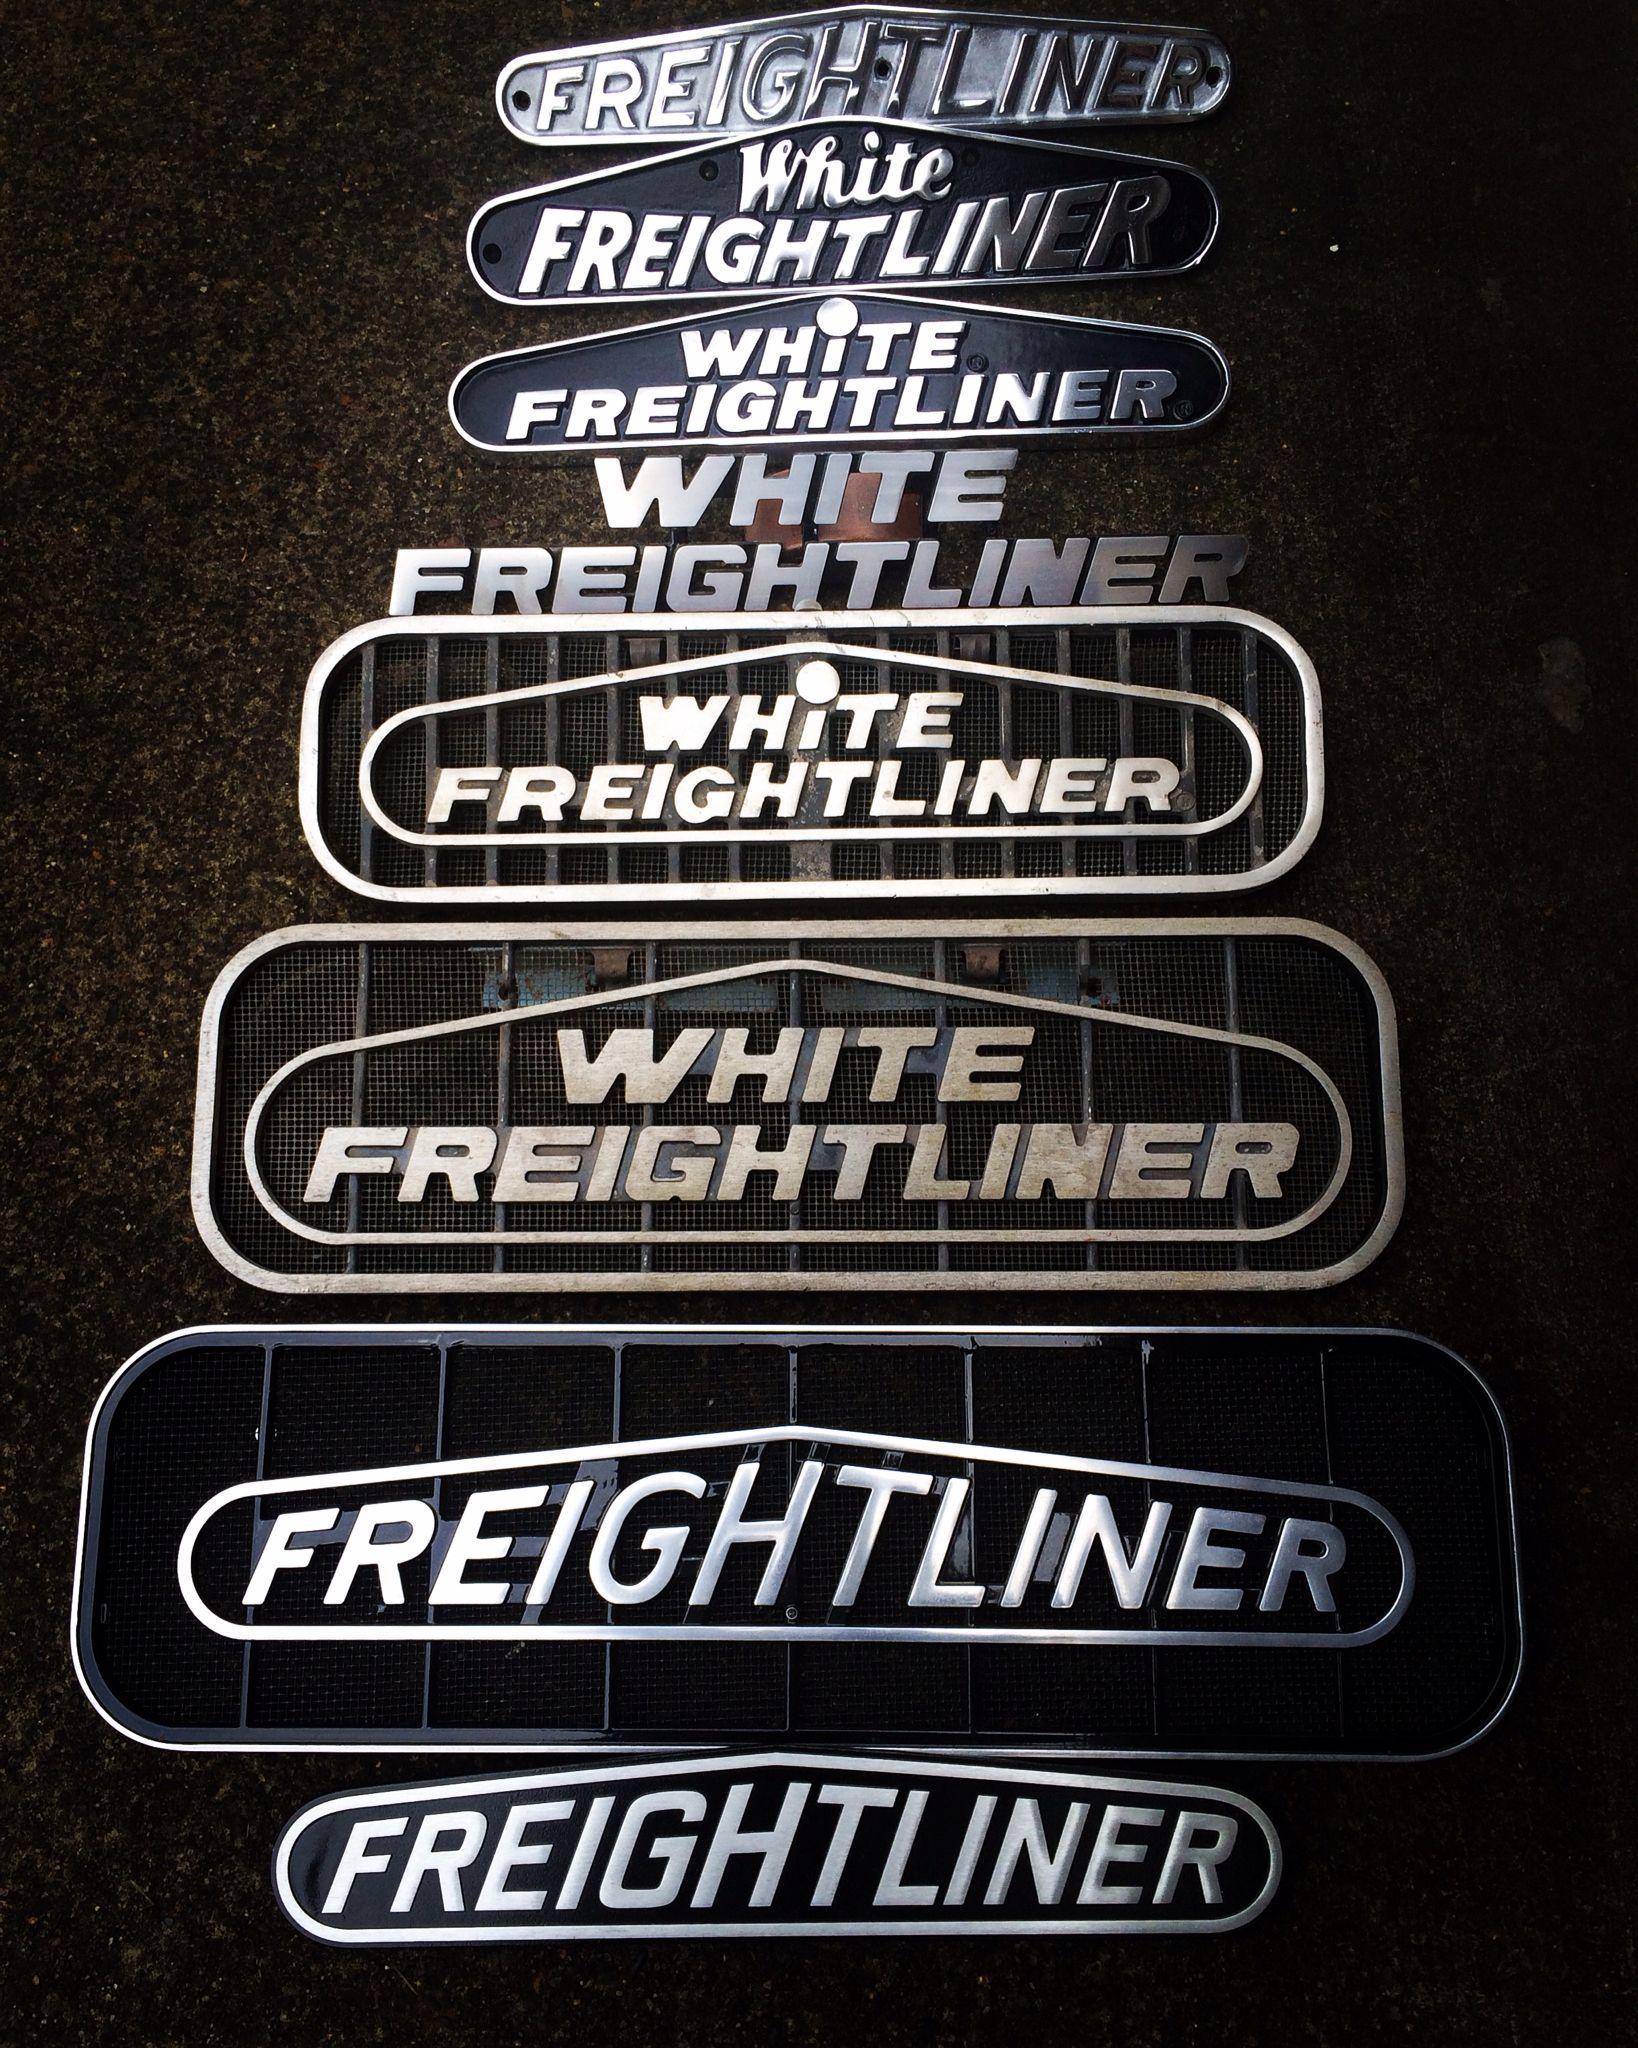 Freightliner Truck Logo - Part of my White Freightliner, Freightliner emblem collection